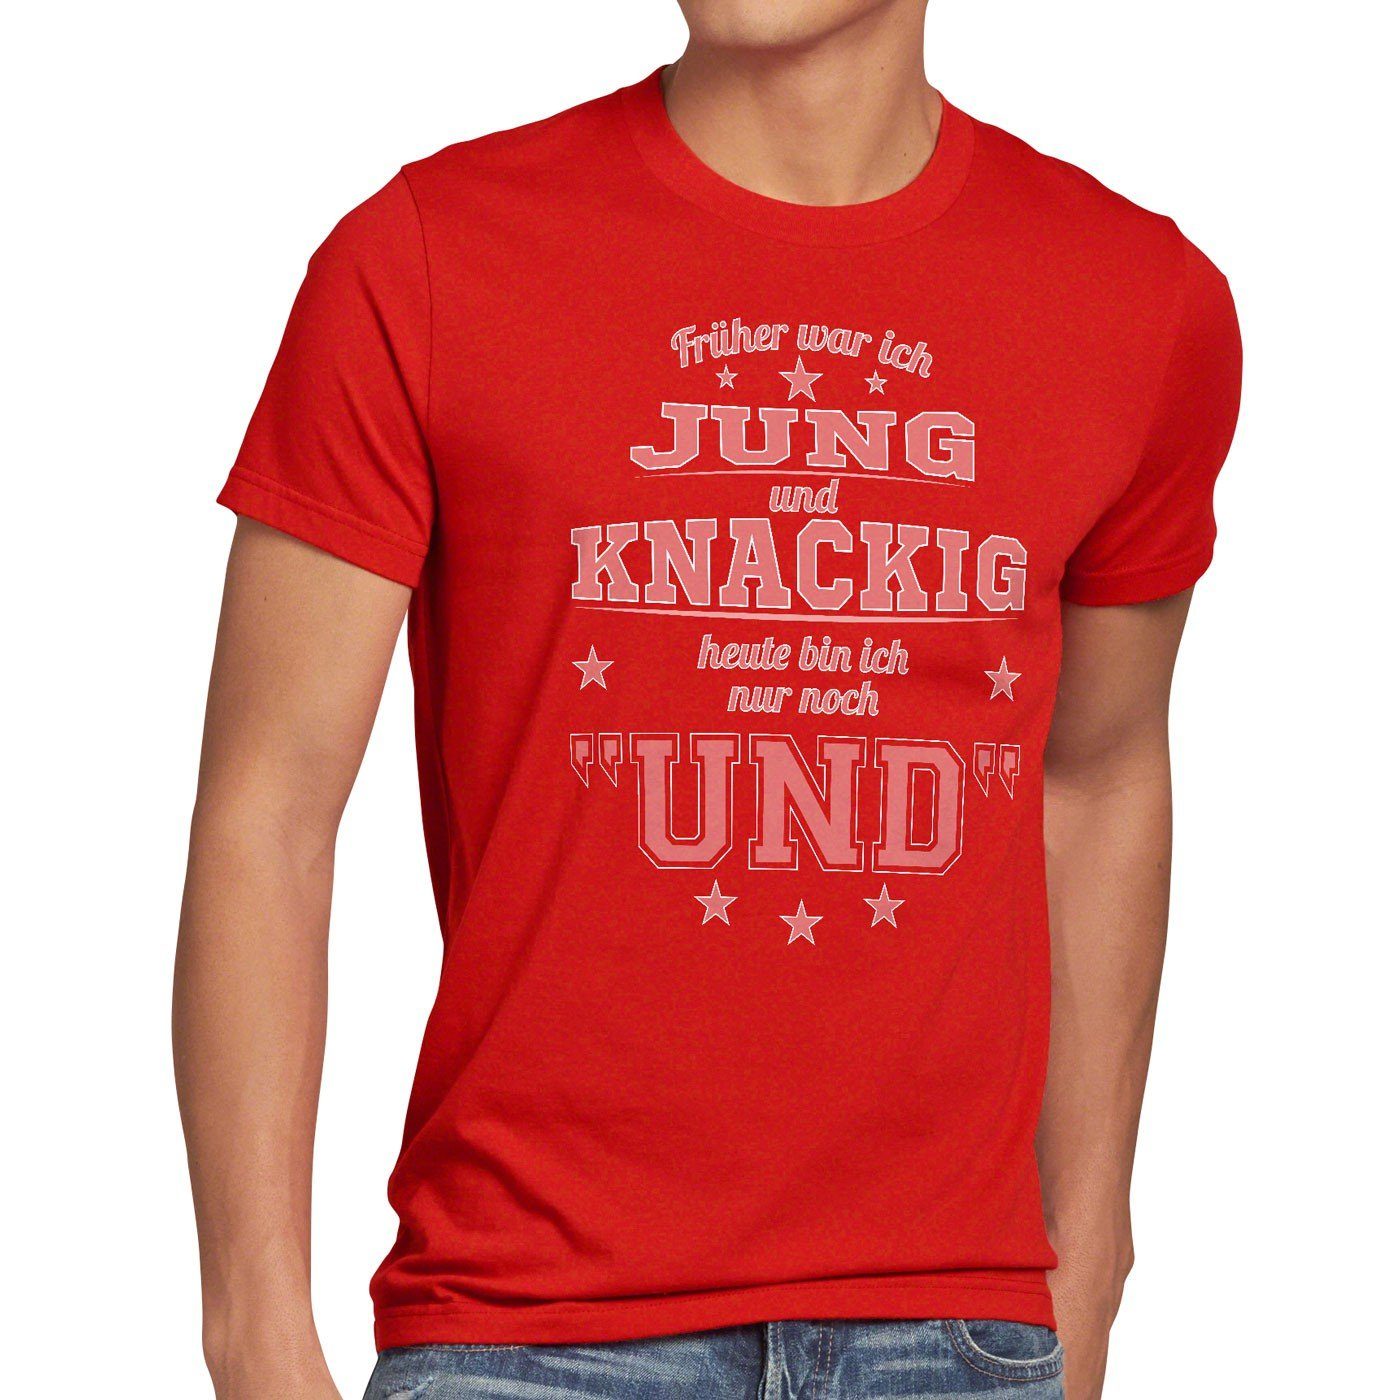 style3 Print-Shirt Herren T-Shirt Früher shirt Spruch Funshirt Fun rot Jung und Gag Knackig heute nur